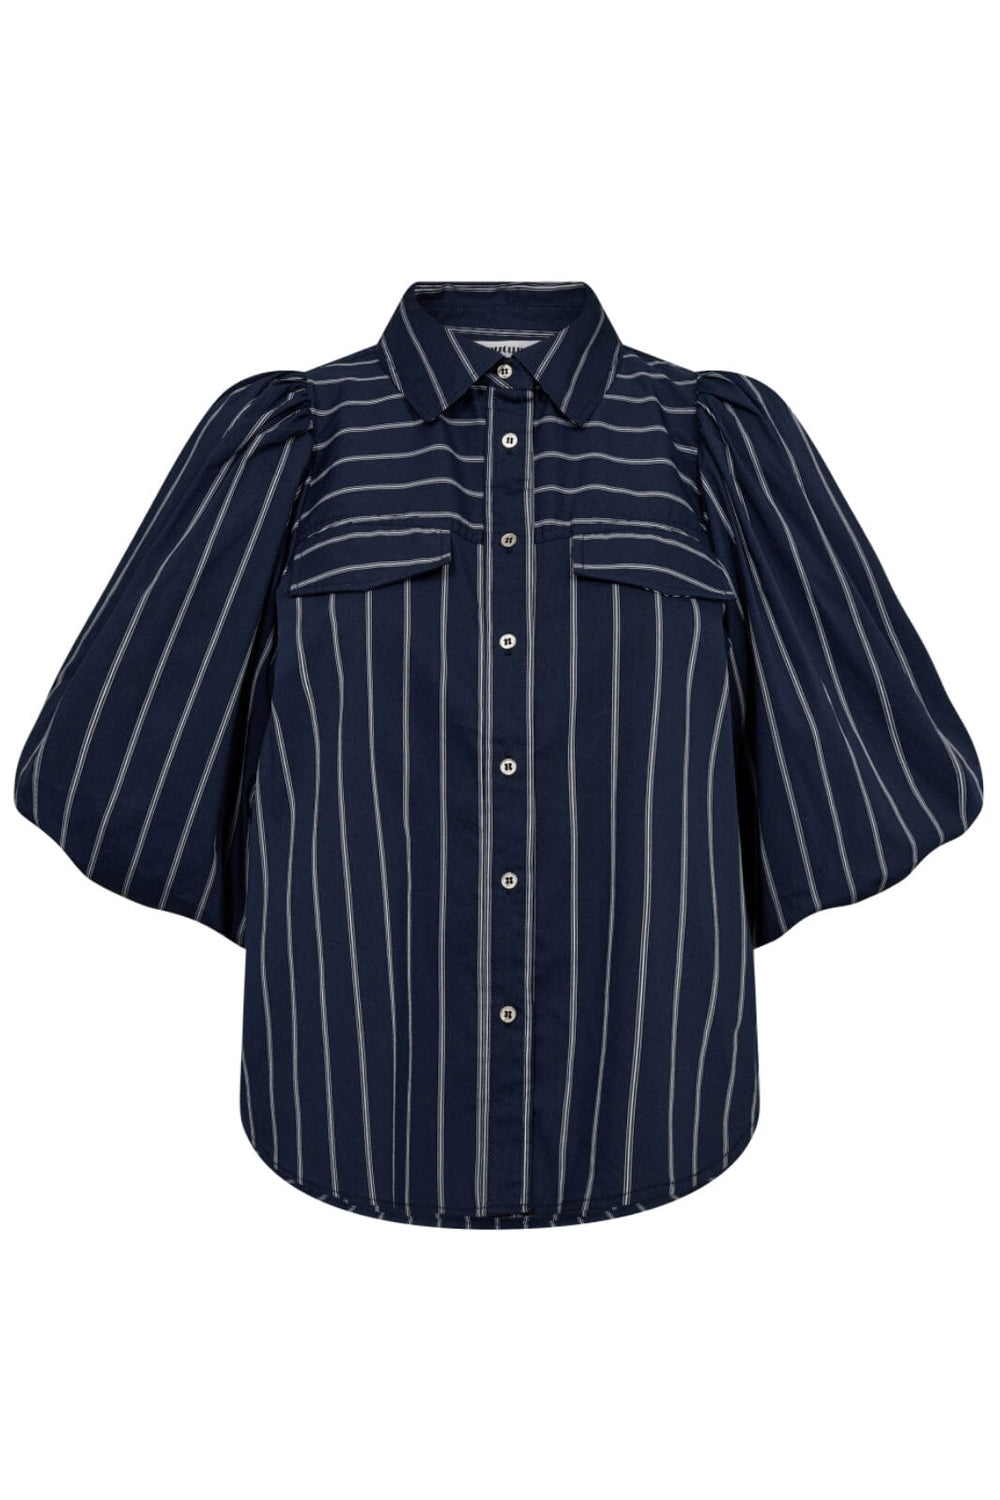 Forudbestilling - Co´couture - Simonacc Stripe Blouse 35559 - 120 Navy Skjorter 